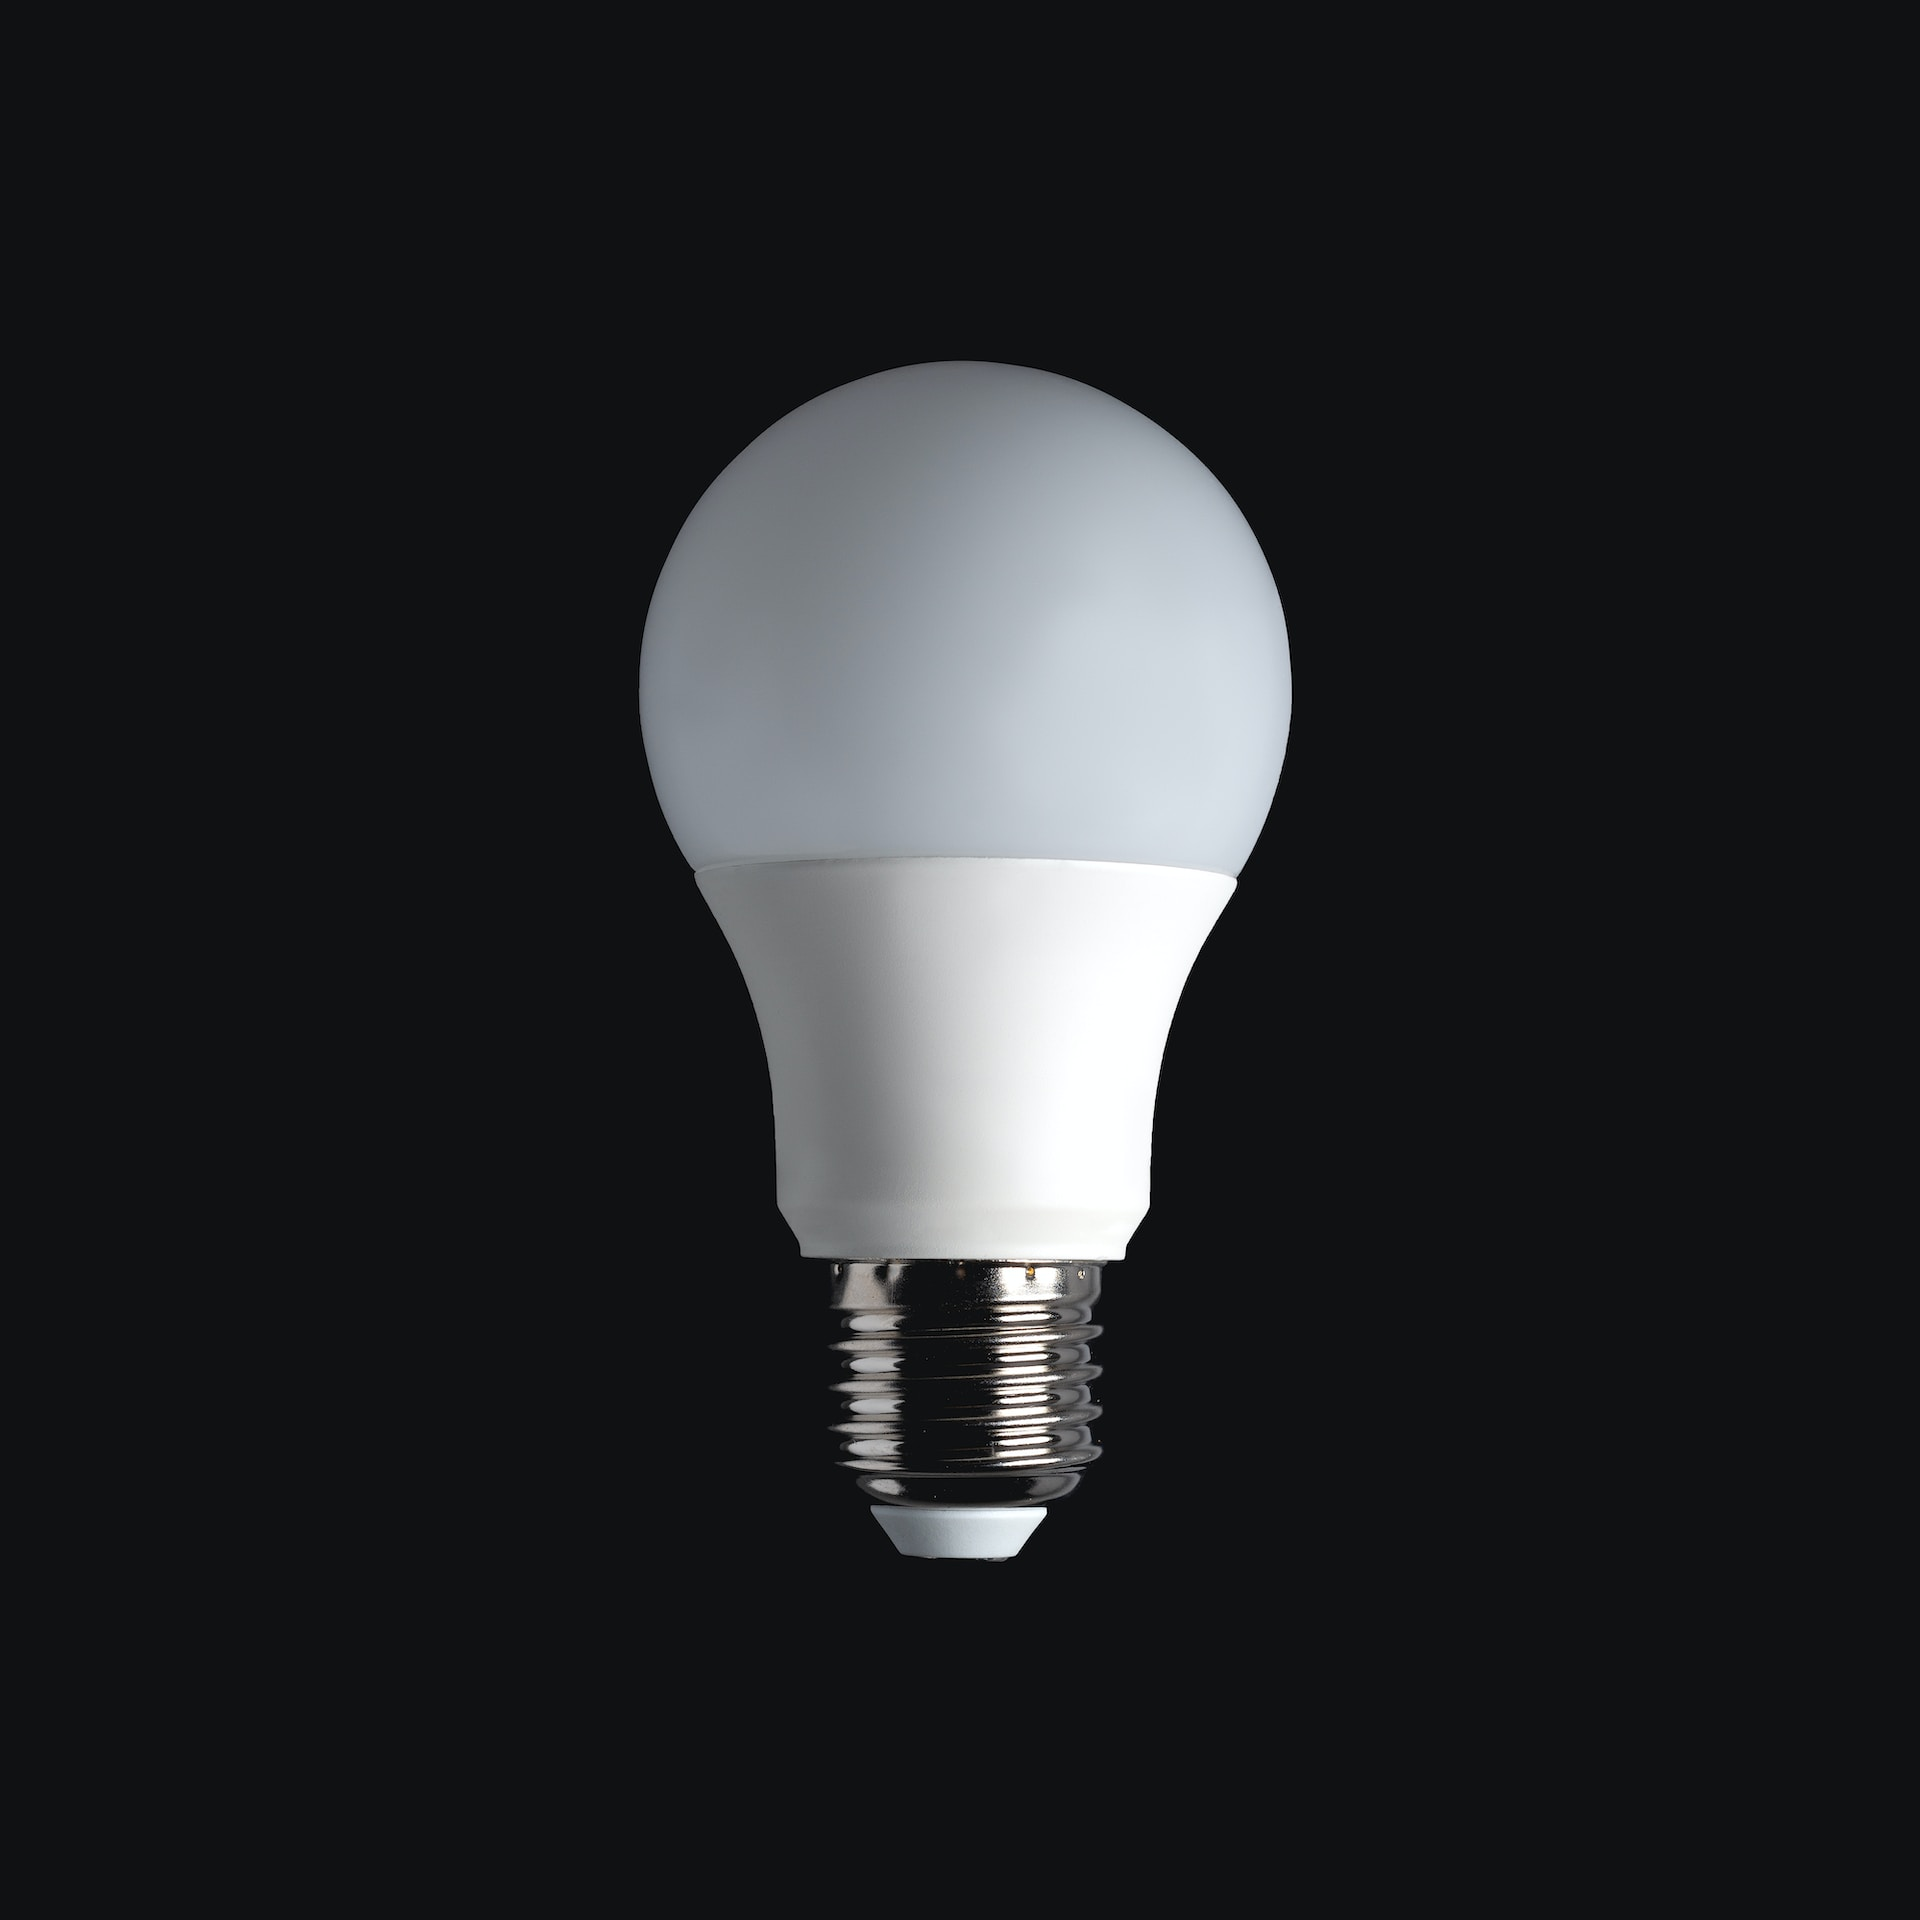 energy-efficient light bulb